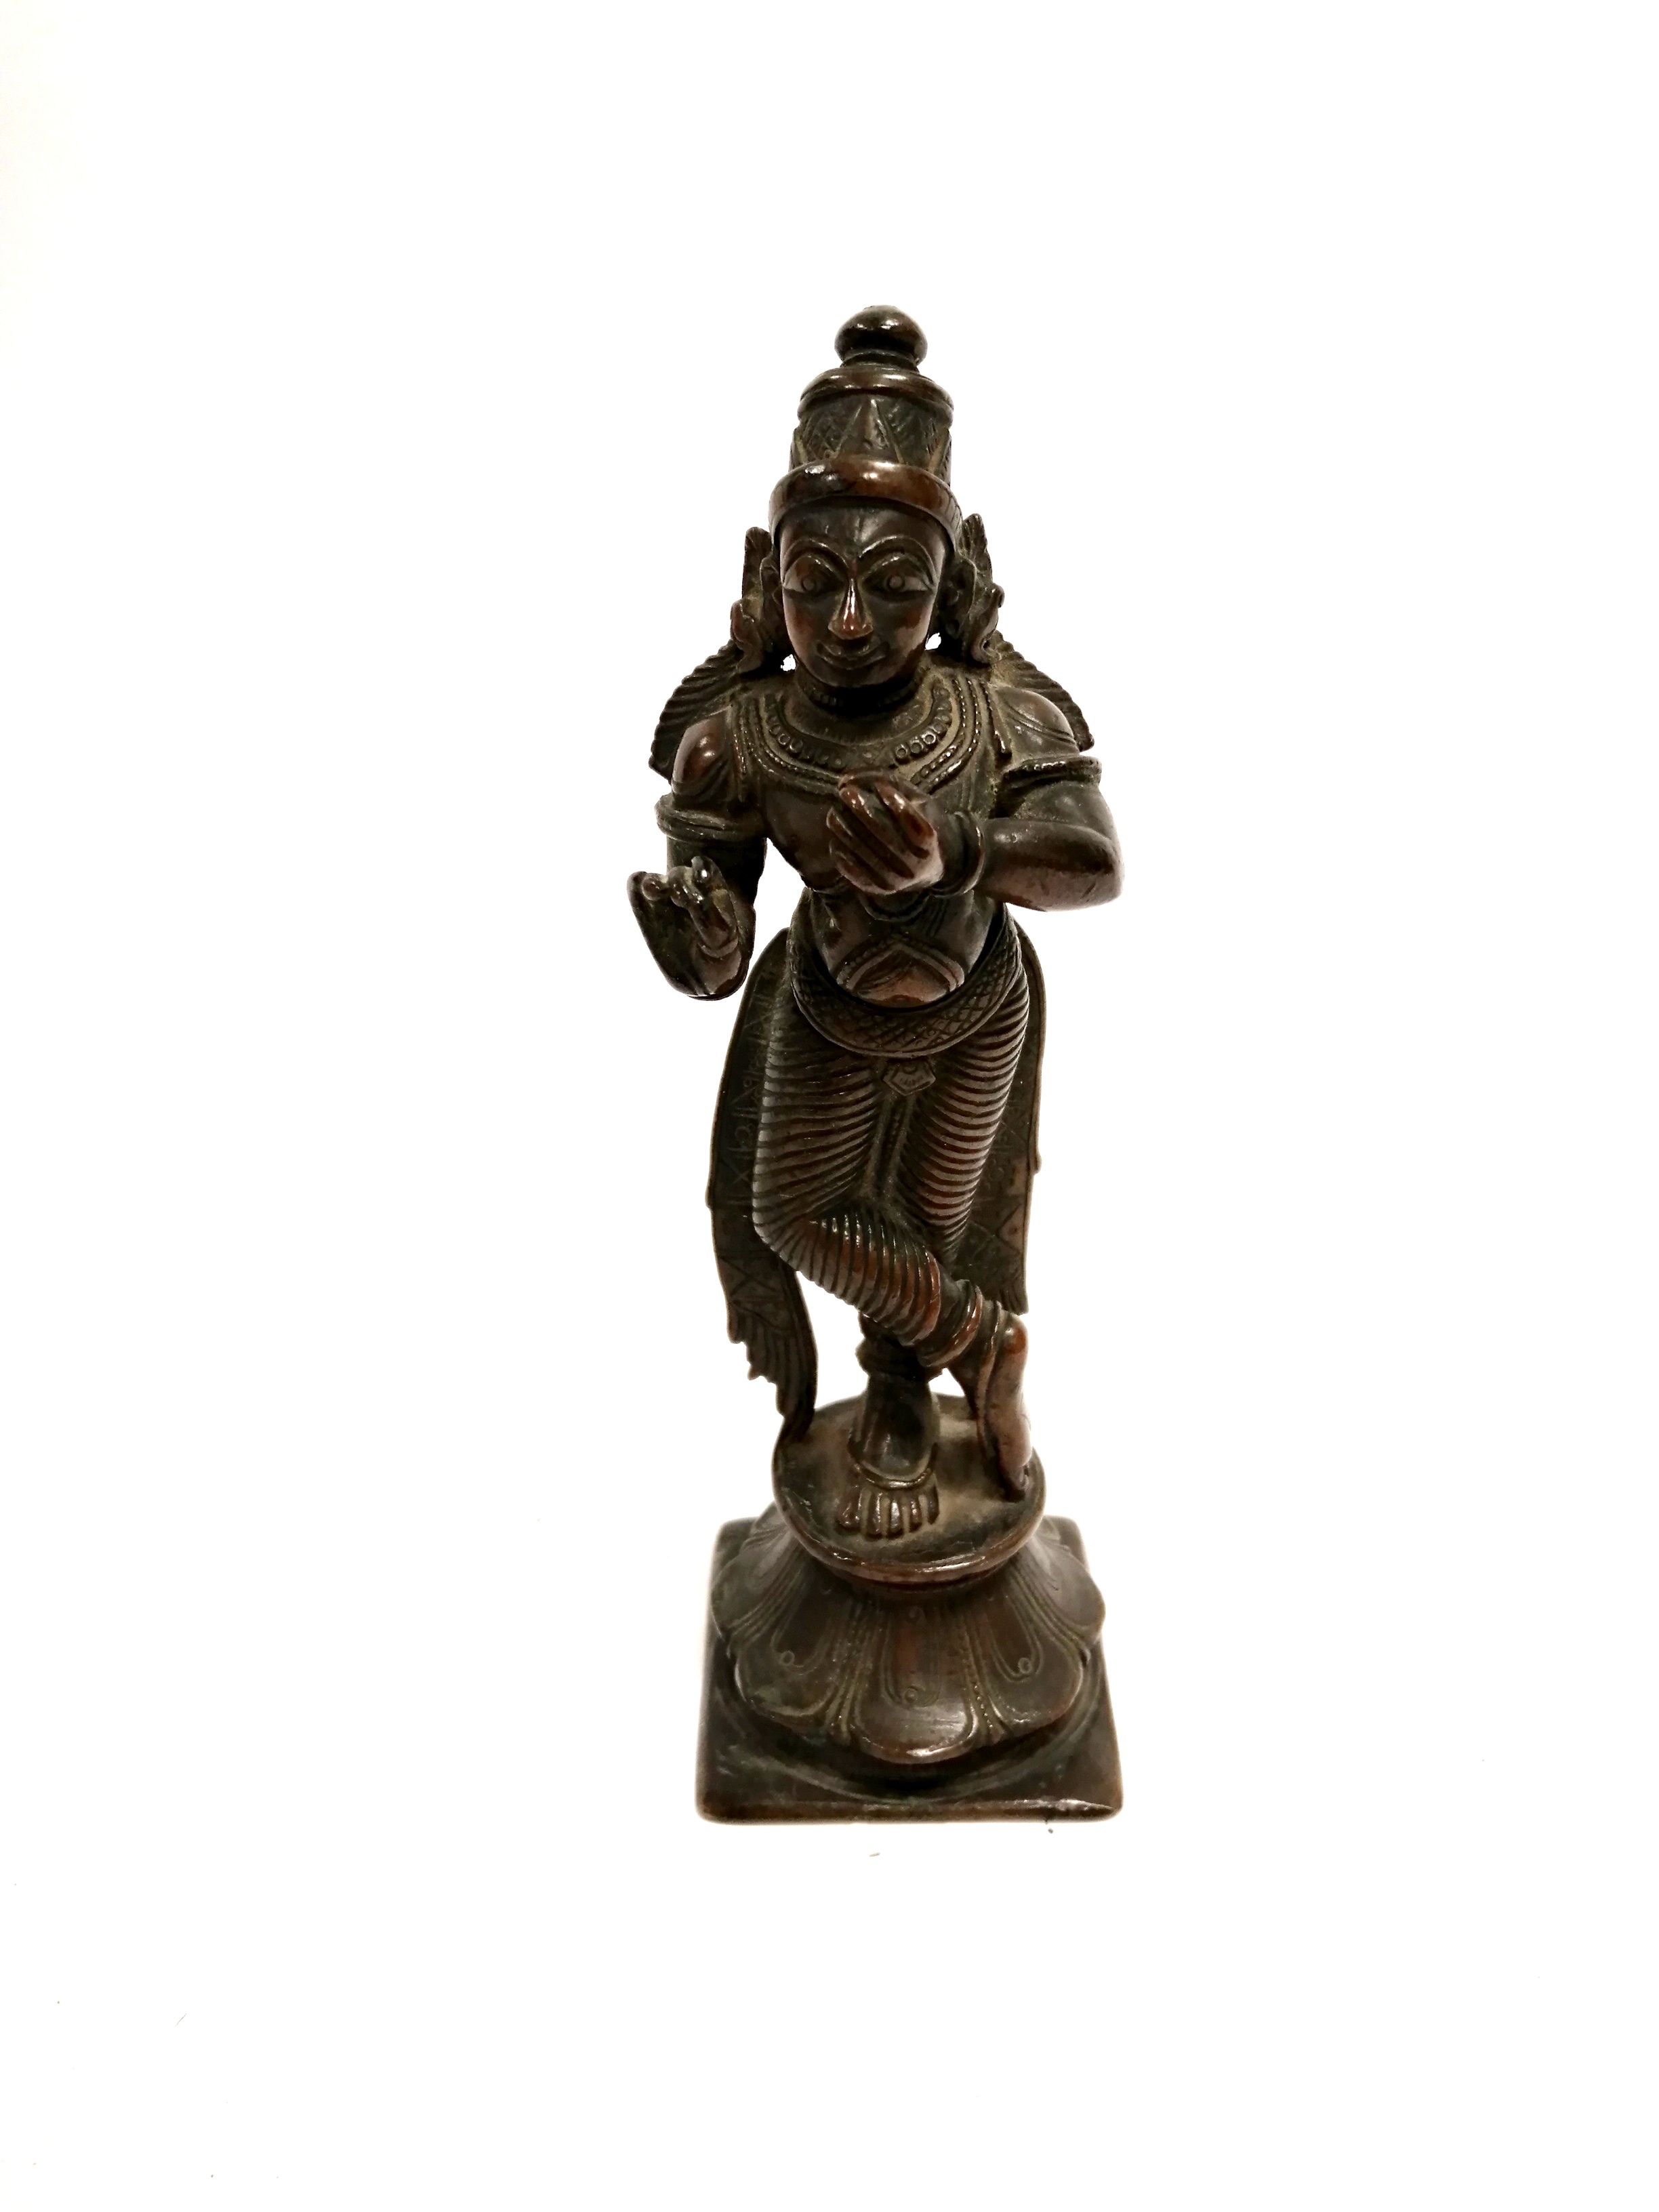 A cast metal South East Asian Hindu figure raised on a lotus panel plinth, height 16.5cm